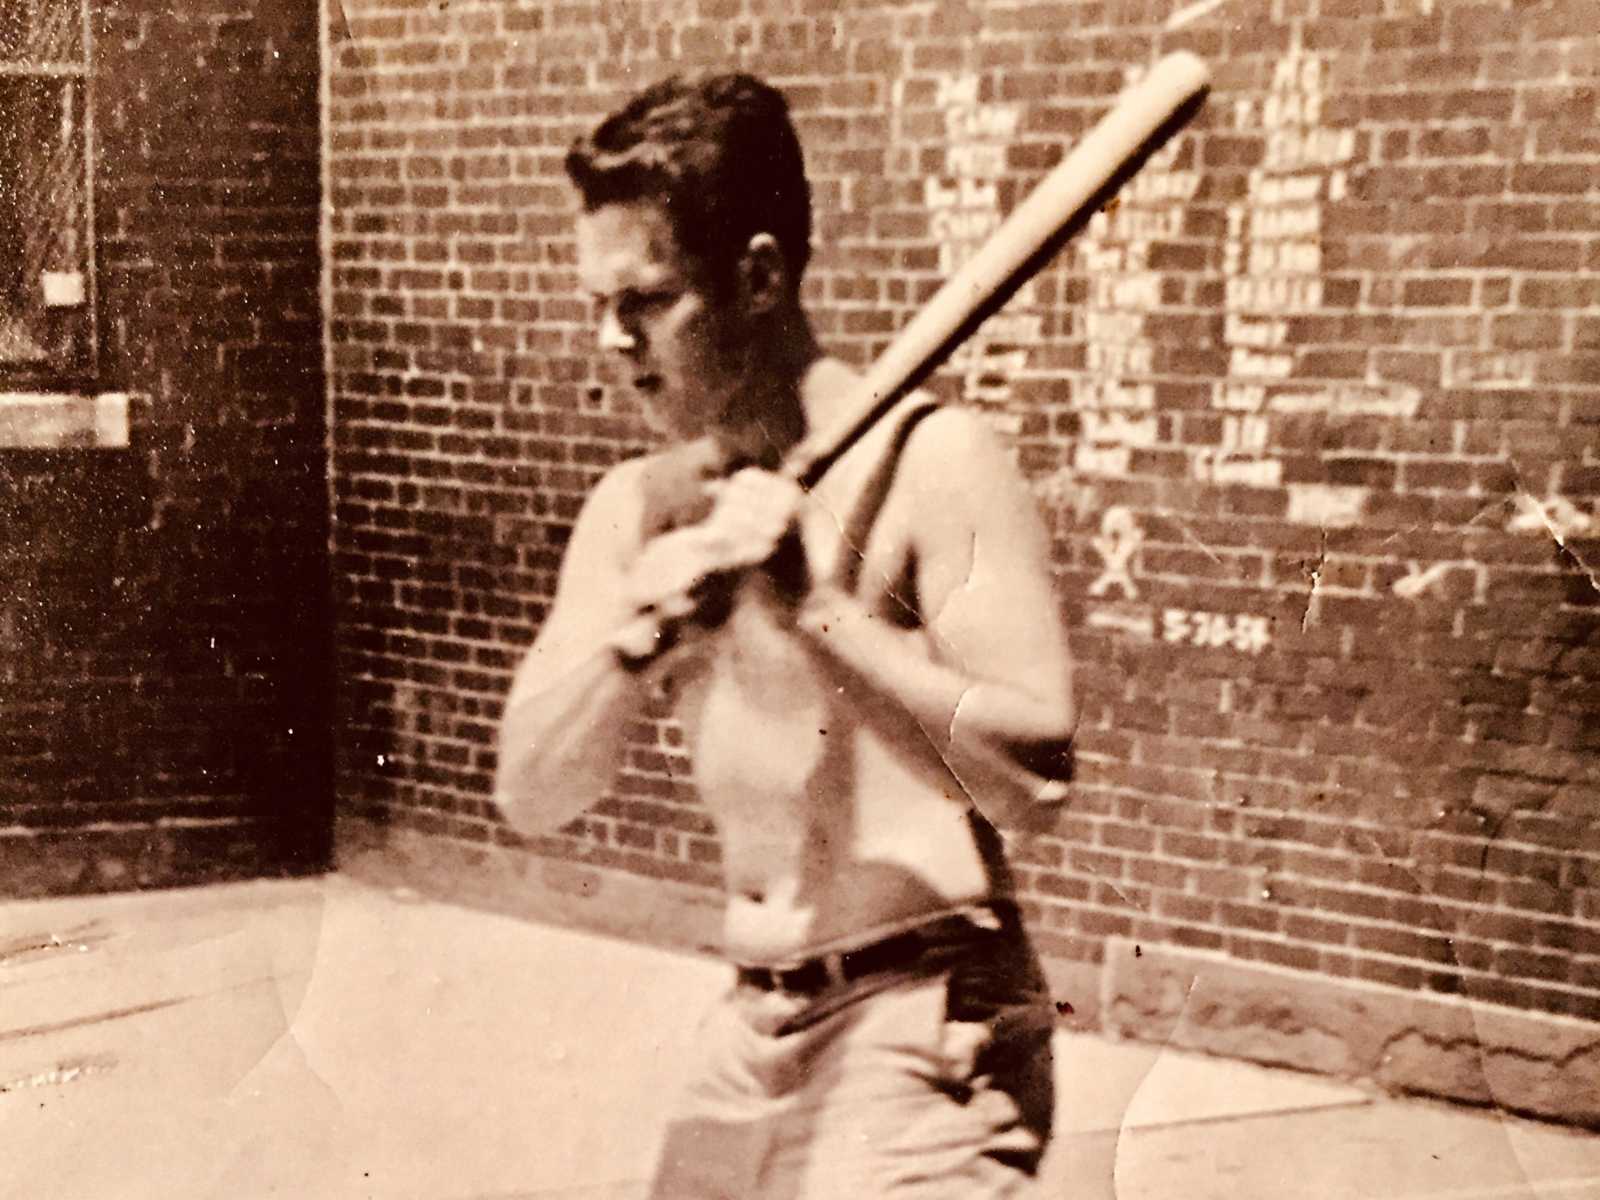 Teen in 20's shirtless holding baseball bat